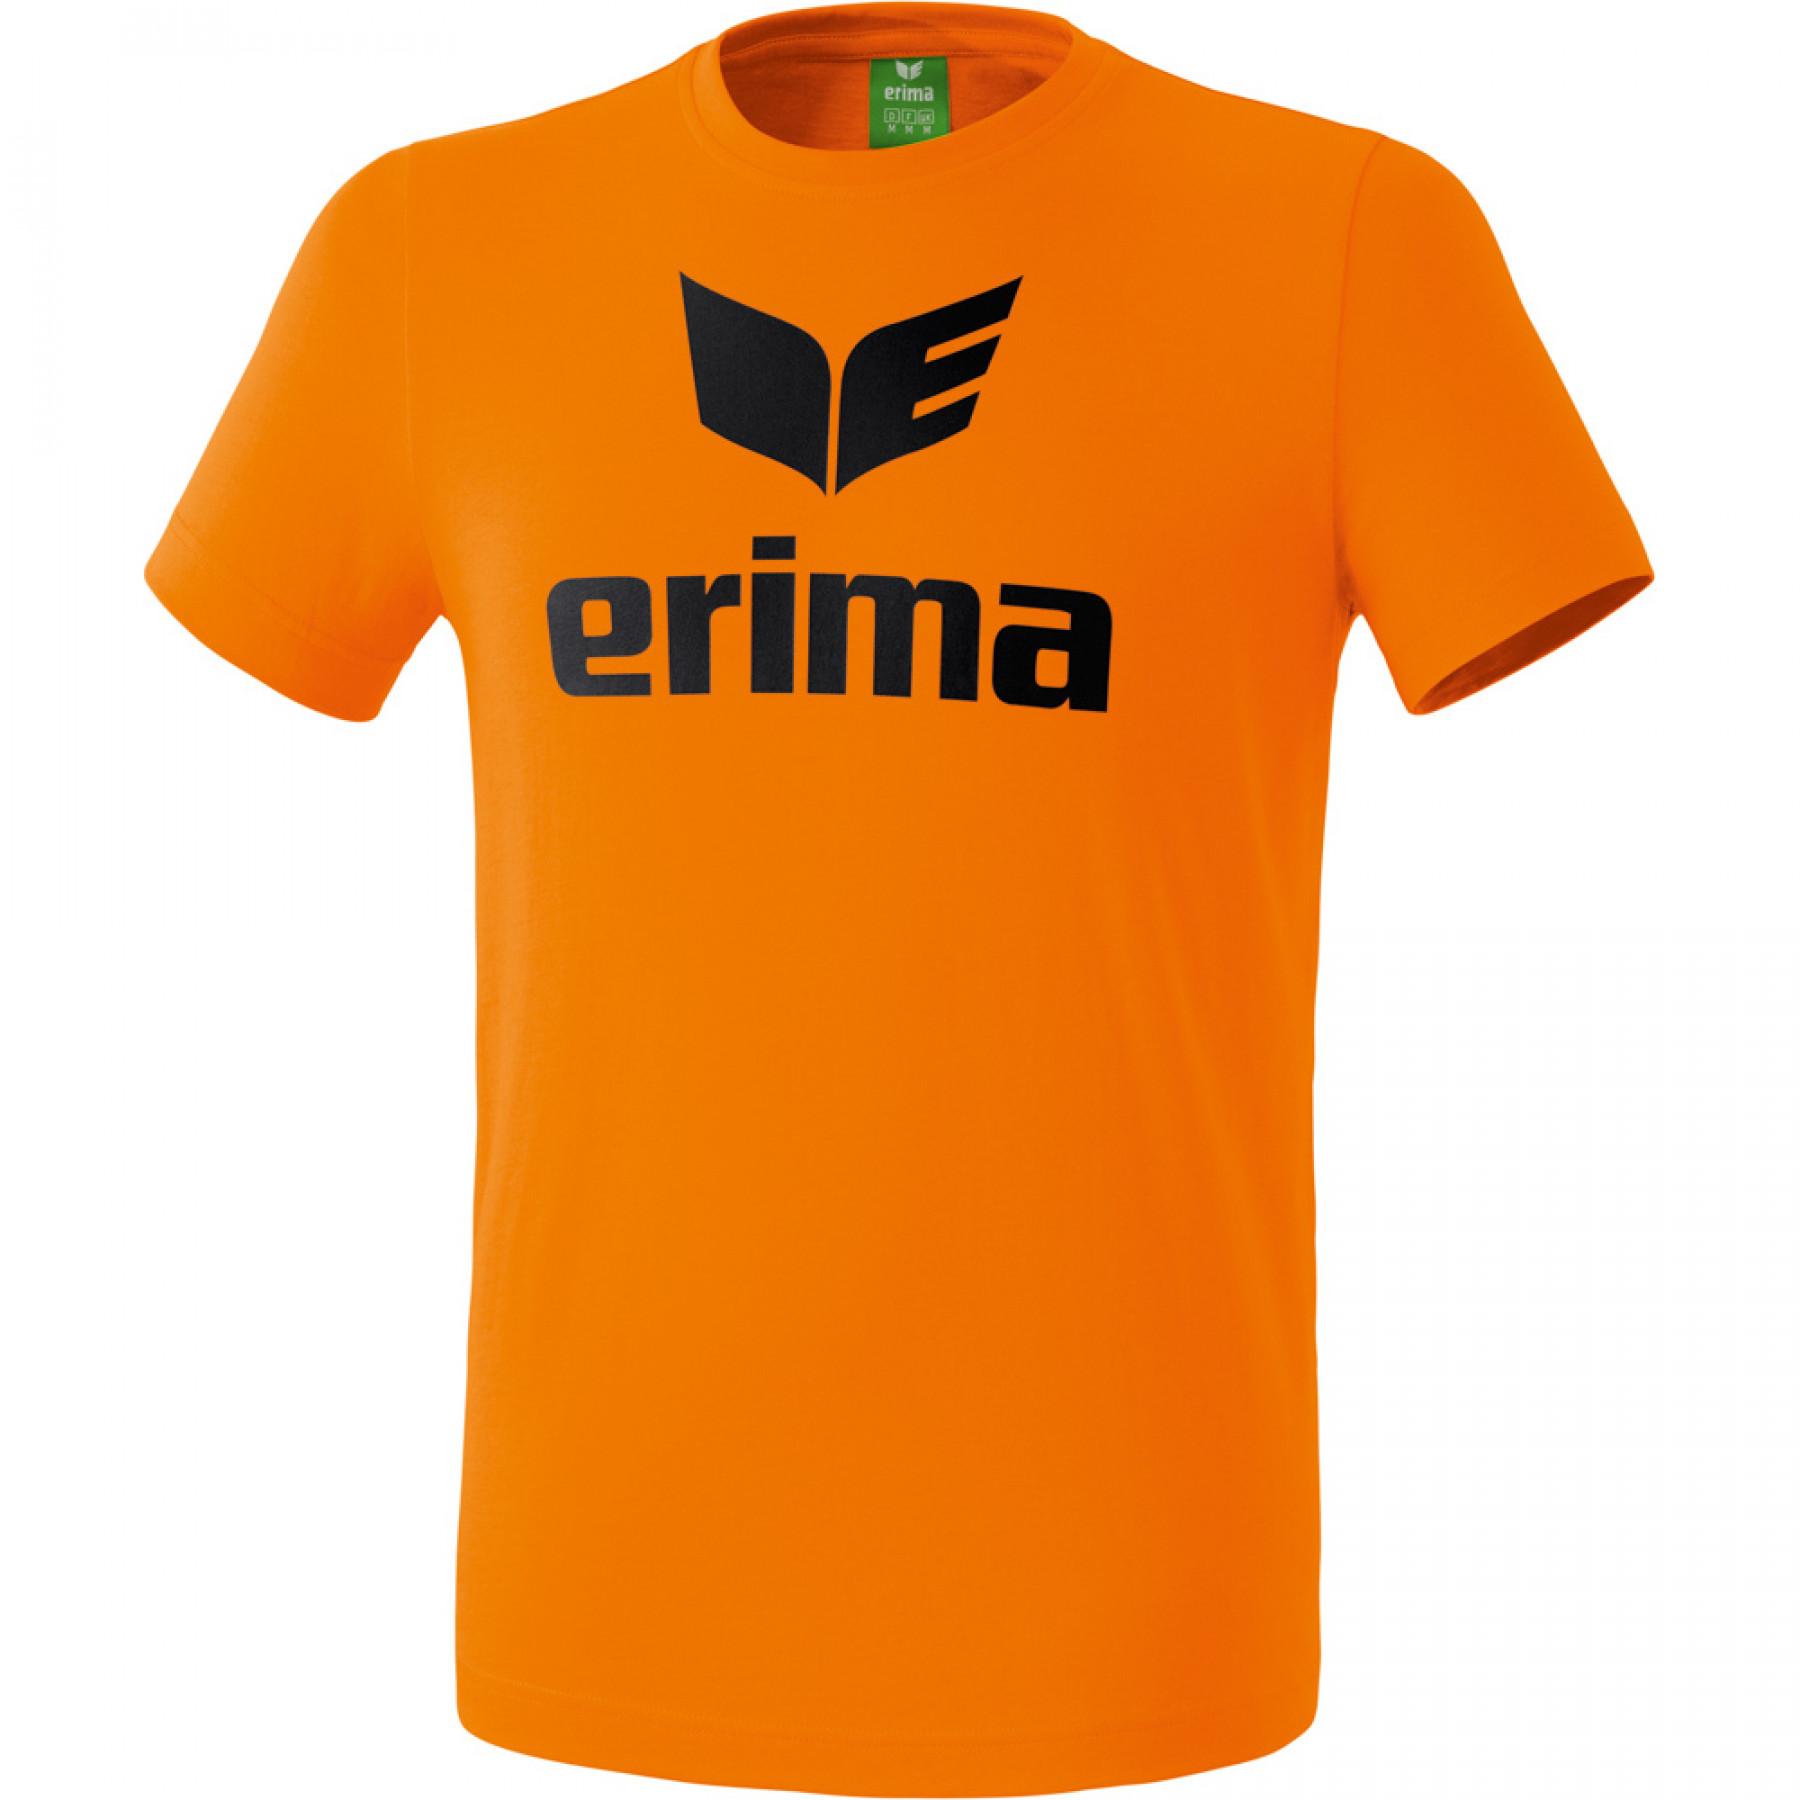 Child's T-shirt Erima promo